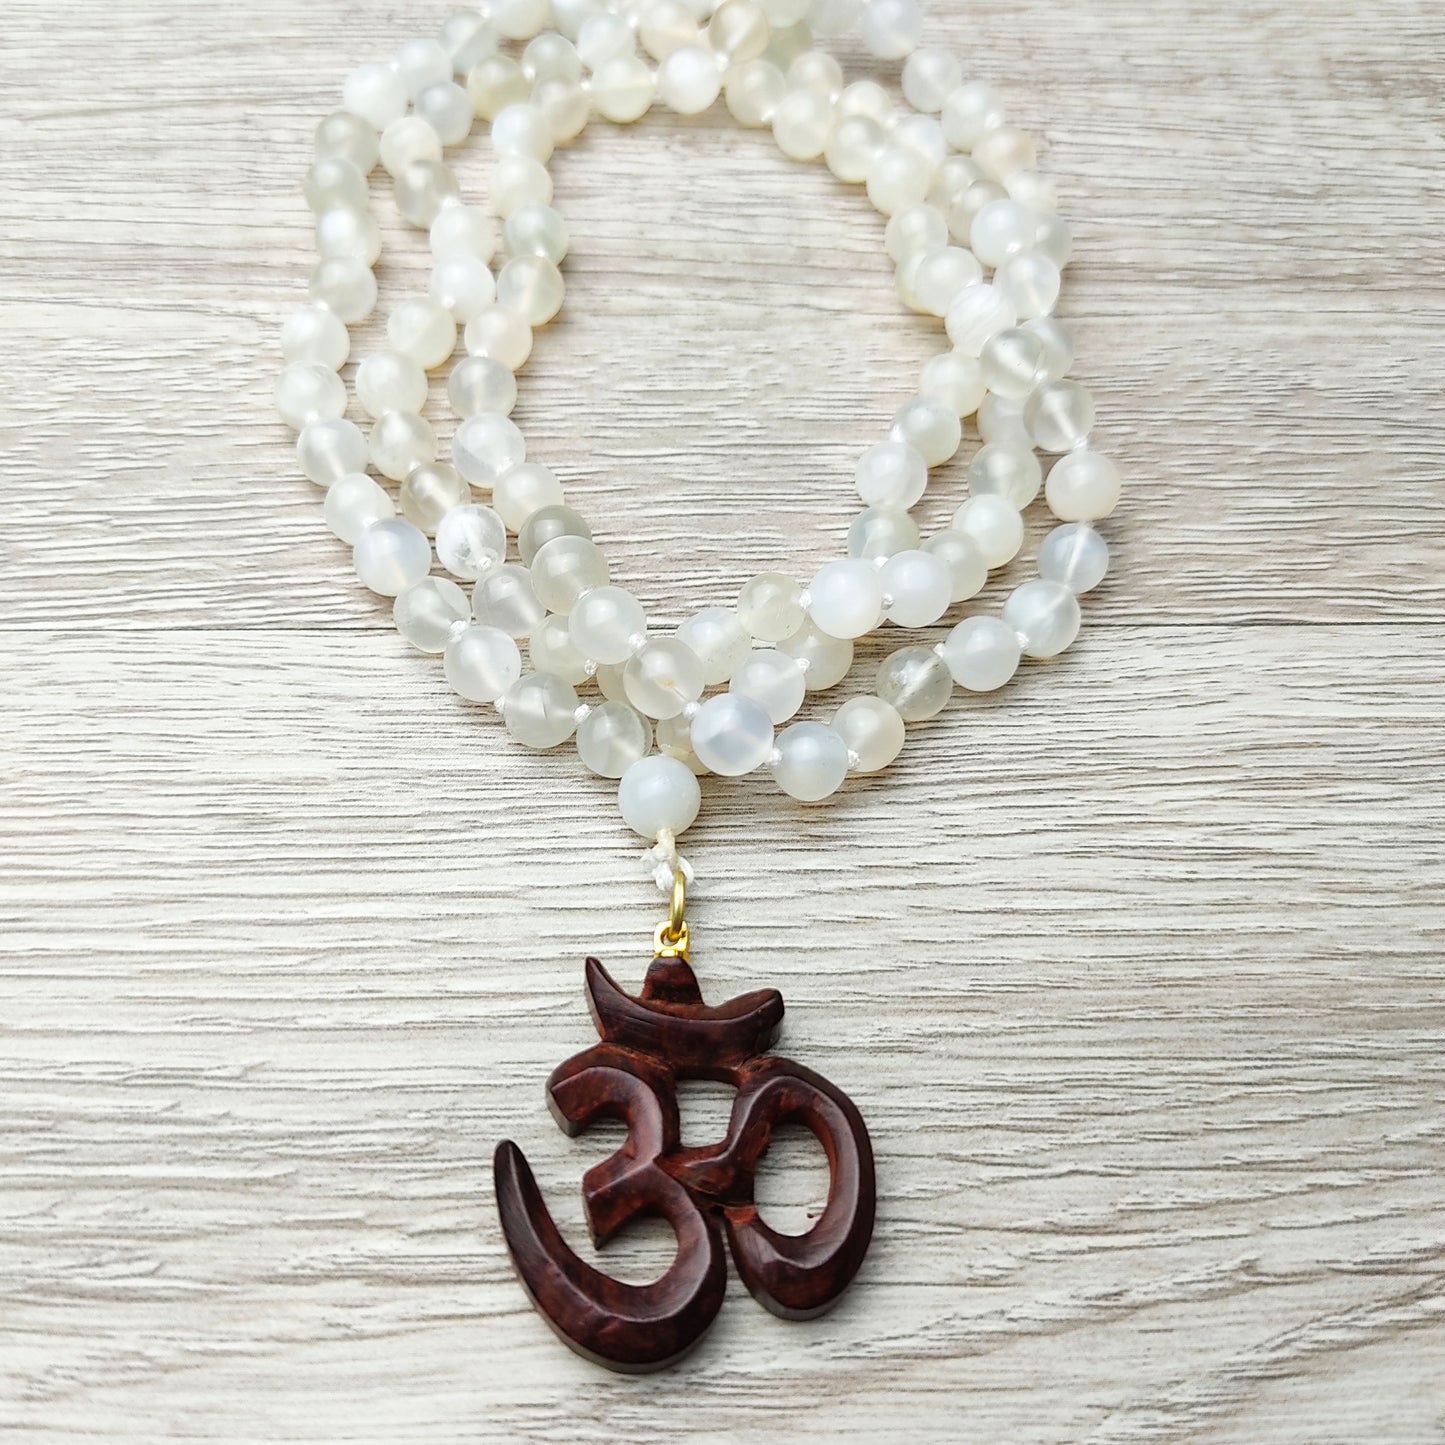 Rainbow Moonstone Beads Necklace with Rosewood Om Symbol Pendant Yoga Gift